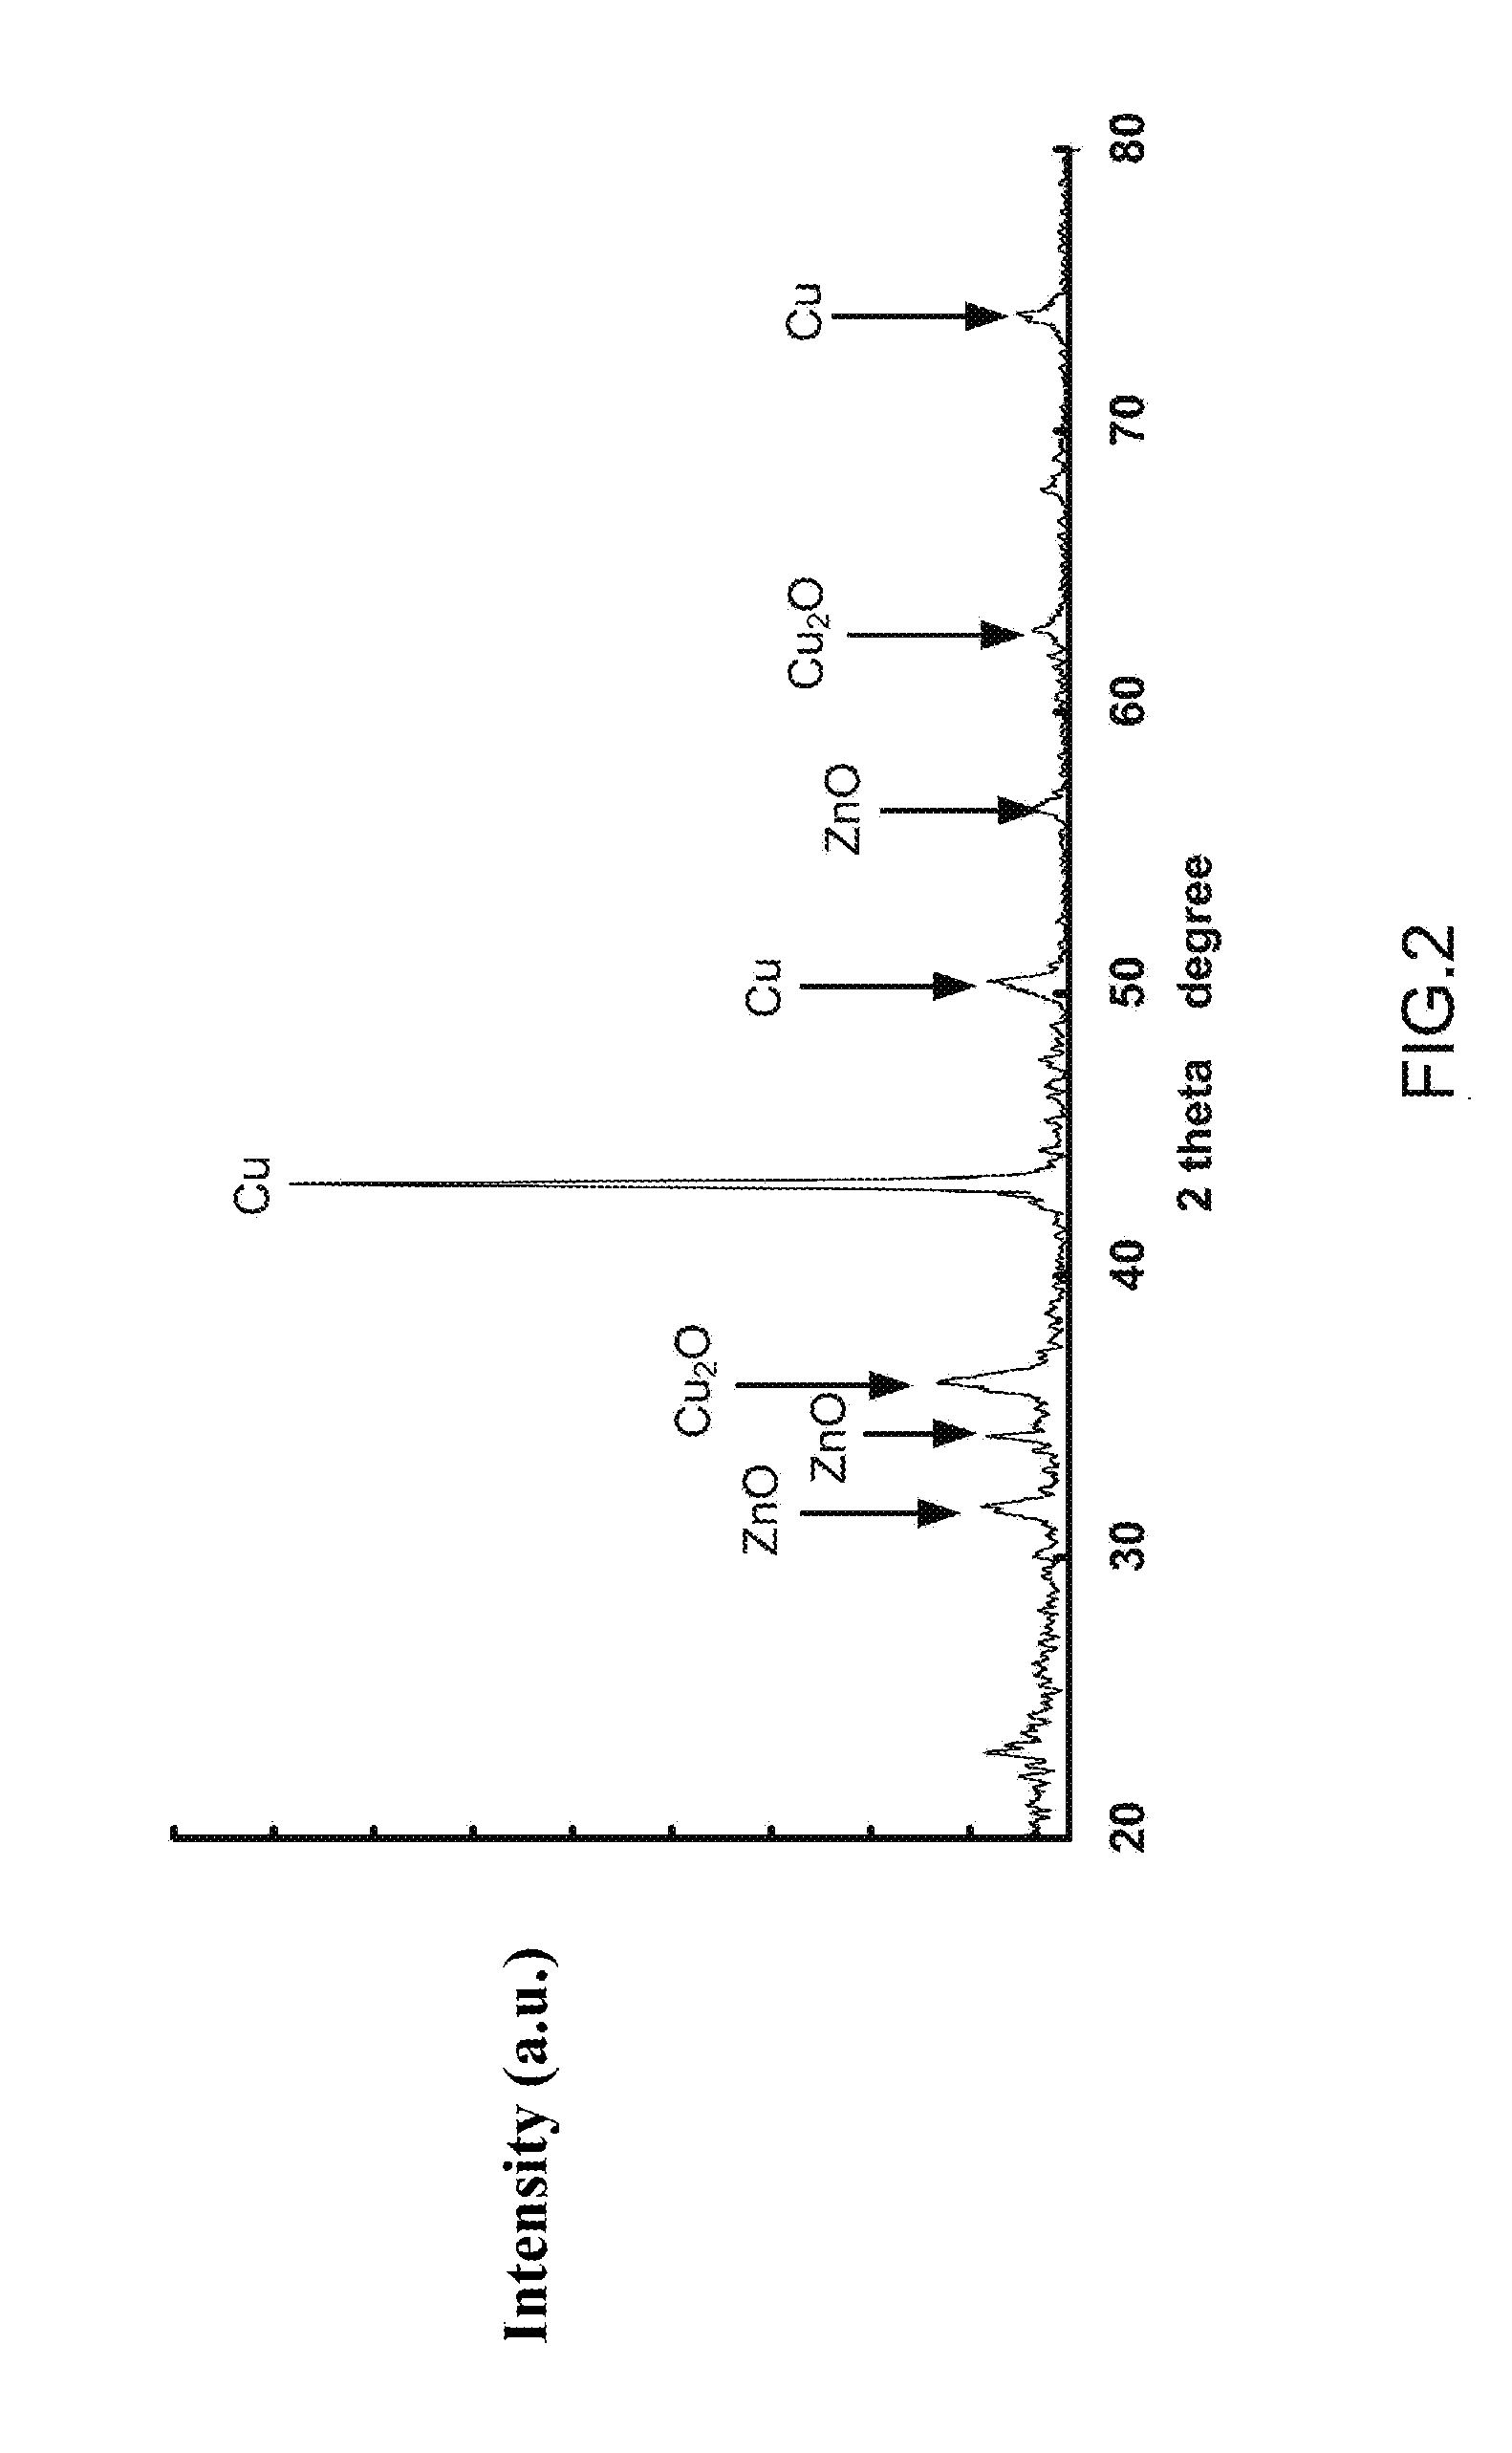 Method of Fabricating Cu-Zn-Al Catalyst for Producing Methanol and Dimethyl Ether